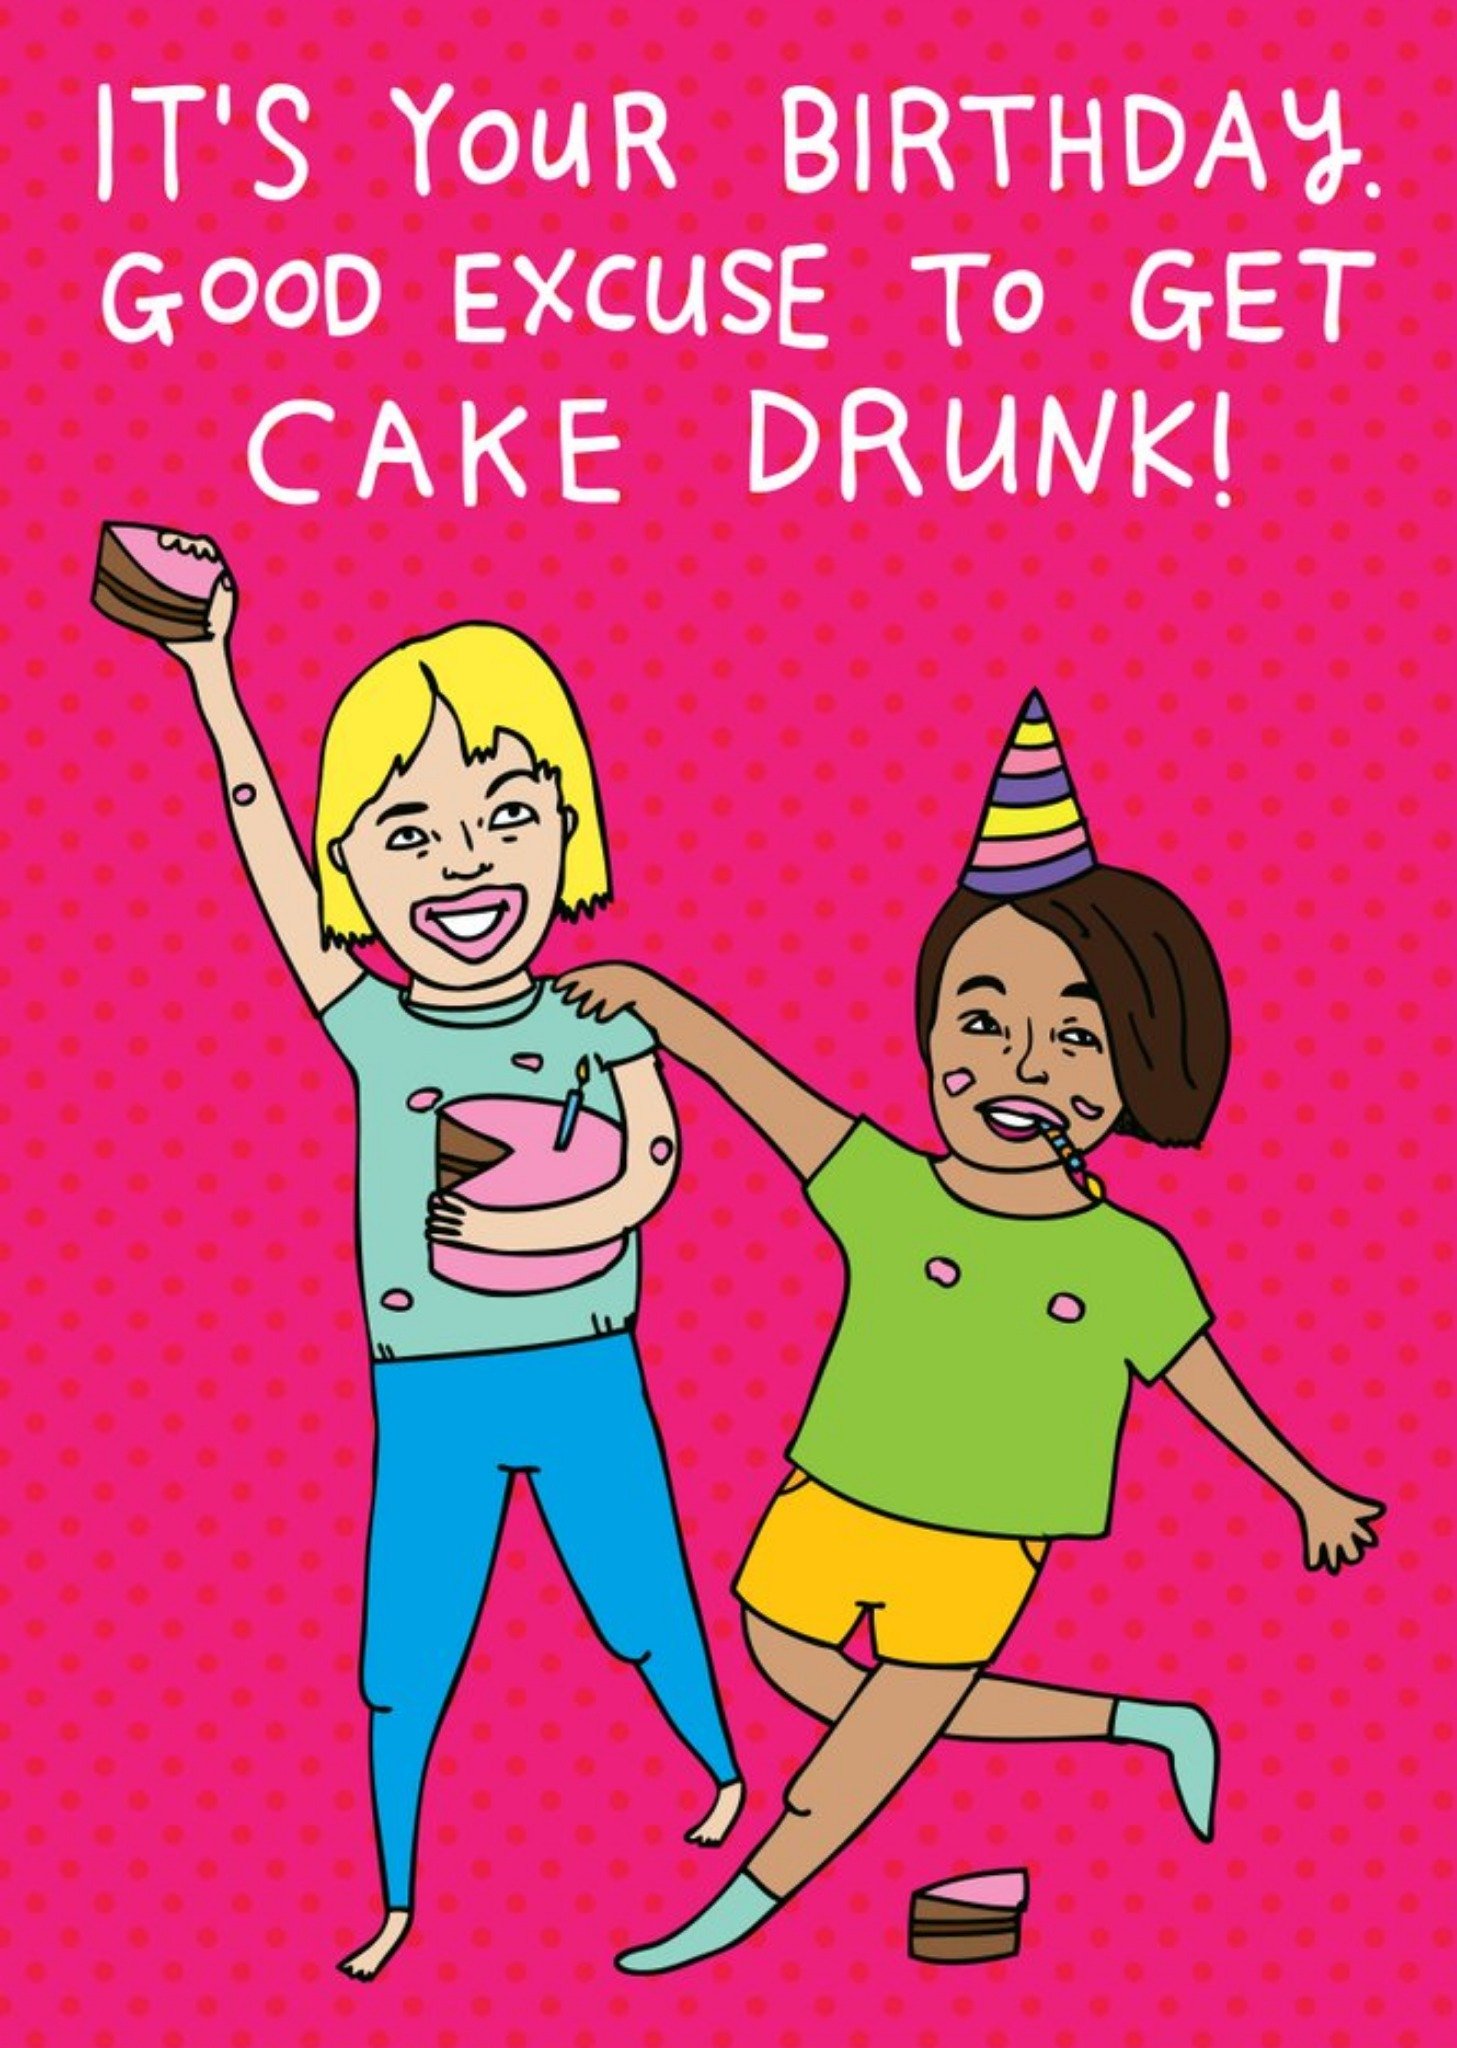 Moonpig Fun Illustration Of People Getting Cake Drunk Birthday Card, Large